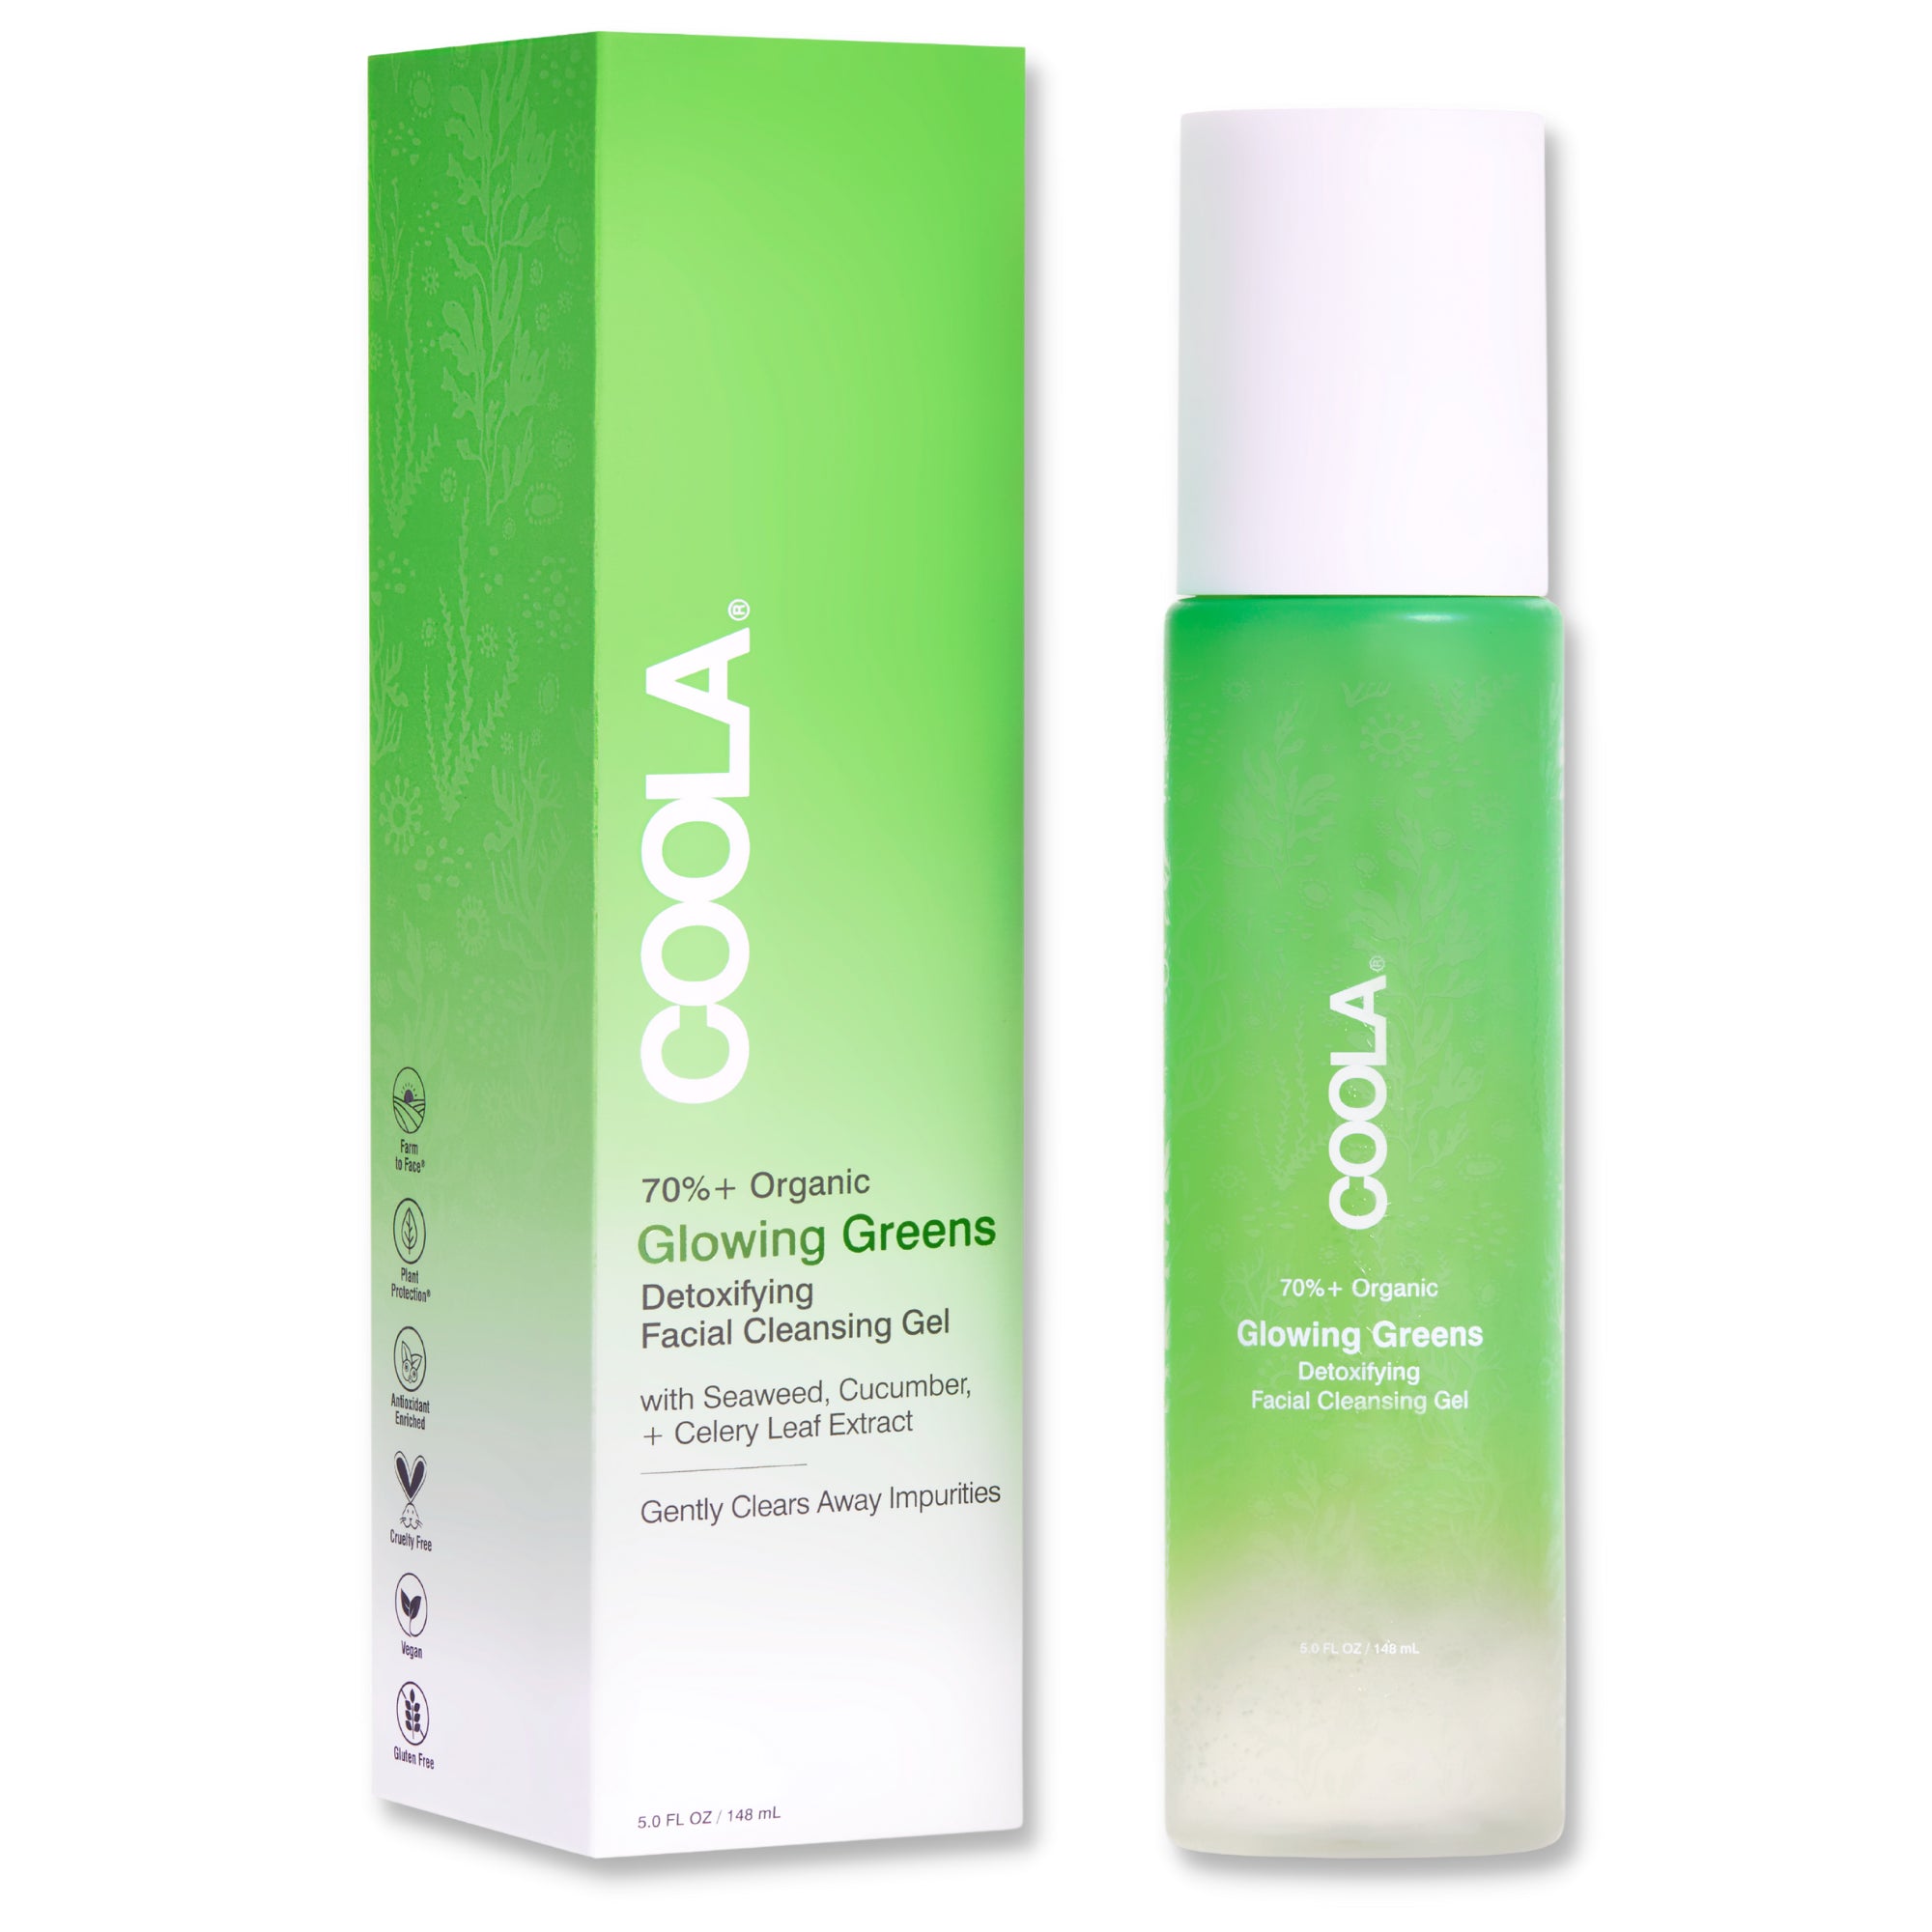 Coola Glowing Greens Detoxifying Facial Cleansing Gel